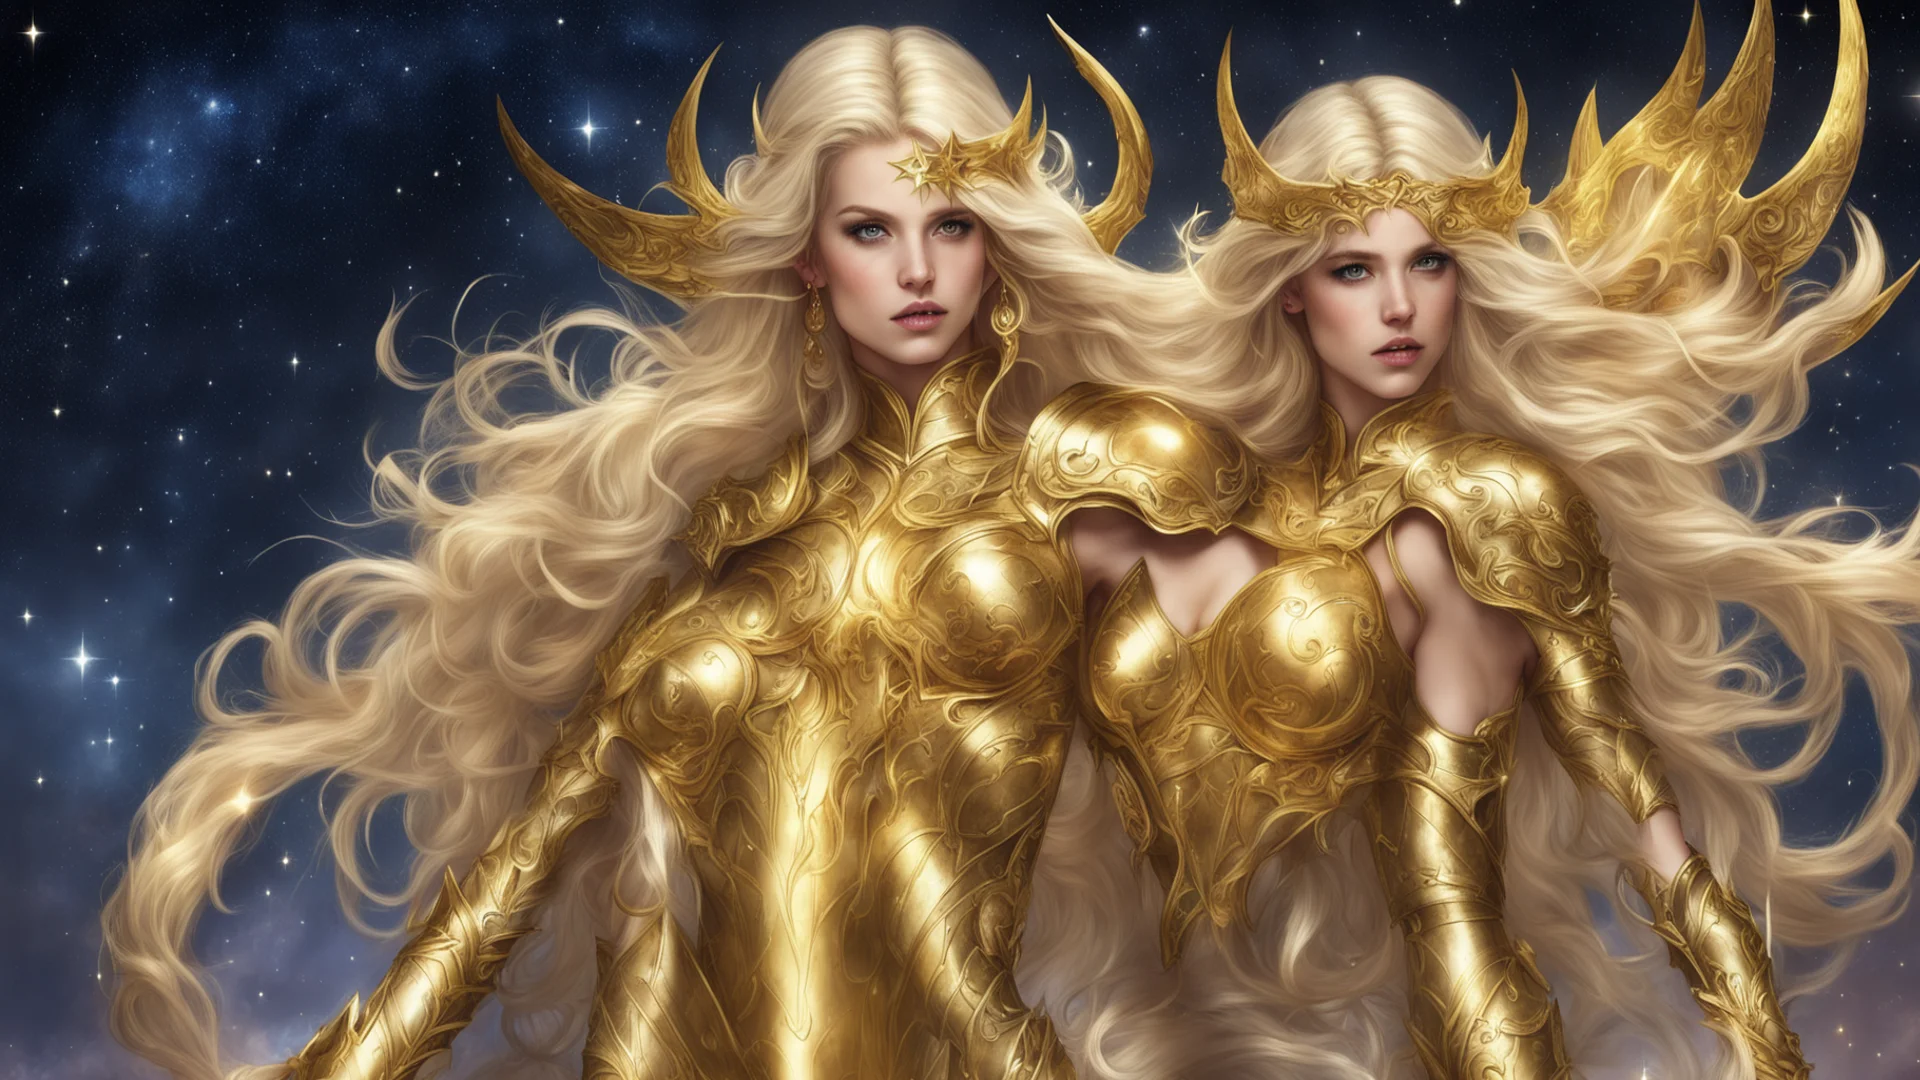 aistar goddess blonde fantasy art night golden armor wide